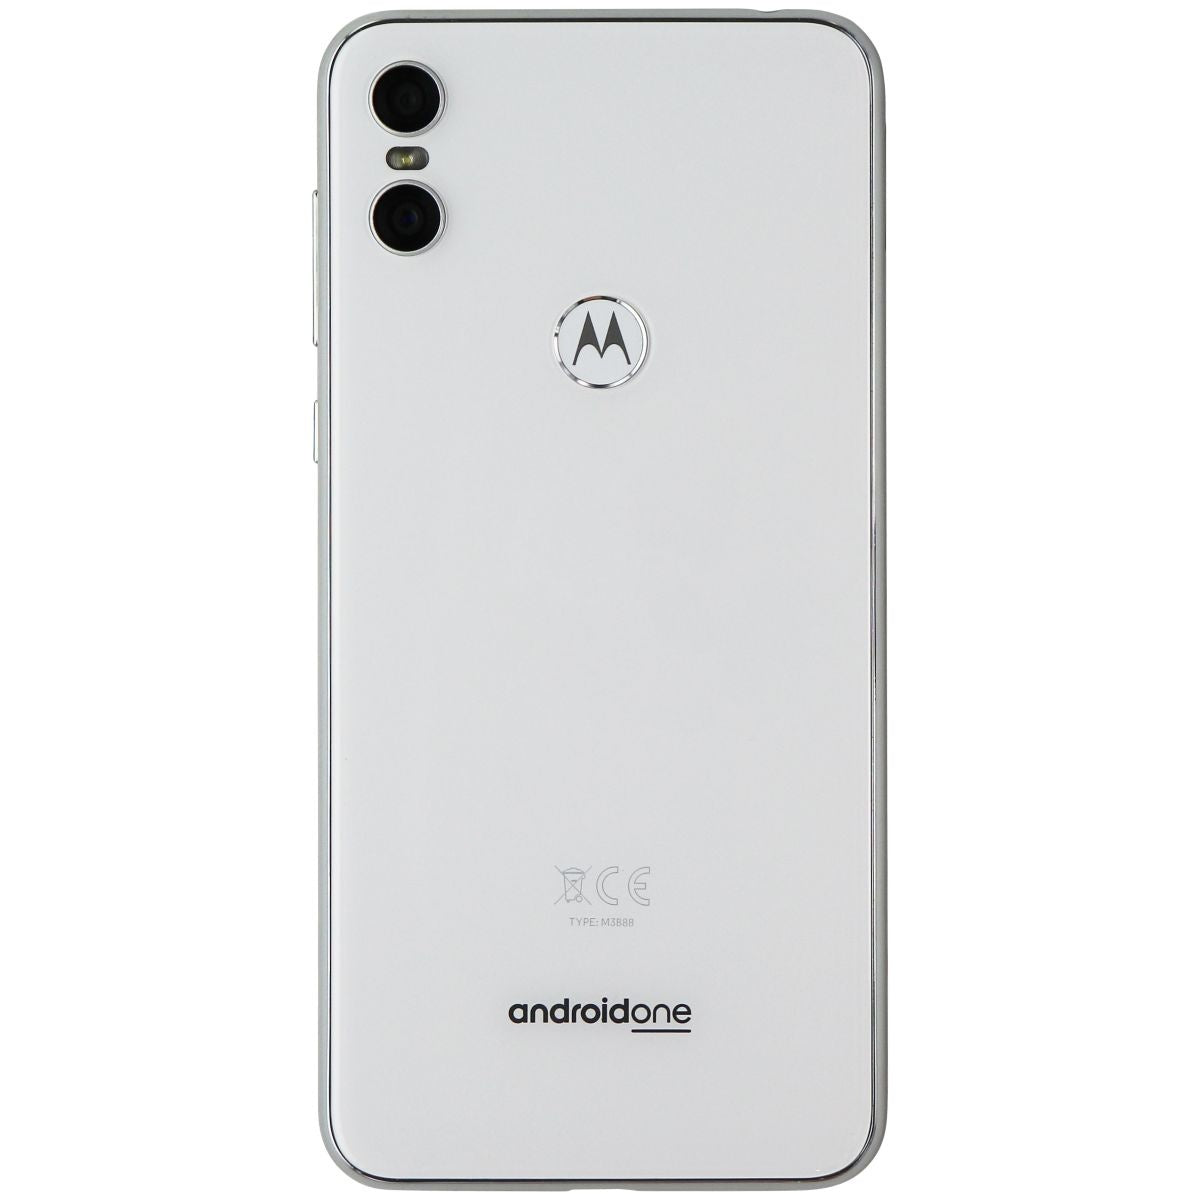 Motorola One (5.9-inch) Smartphone (XT1941-3) GSM + CDMA - 64GB/White Cell Phones & Smartphones Motorola    - Simple Cell Bulk Wholesale Pricing - USA Seller